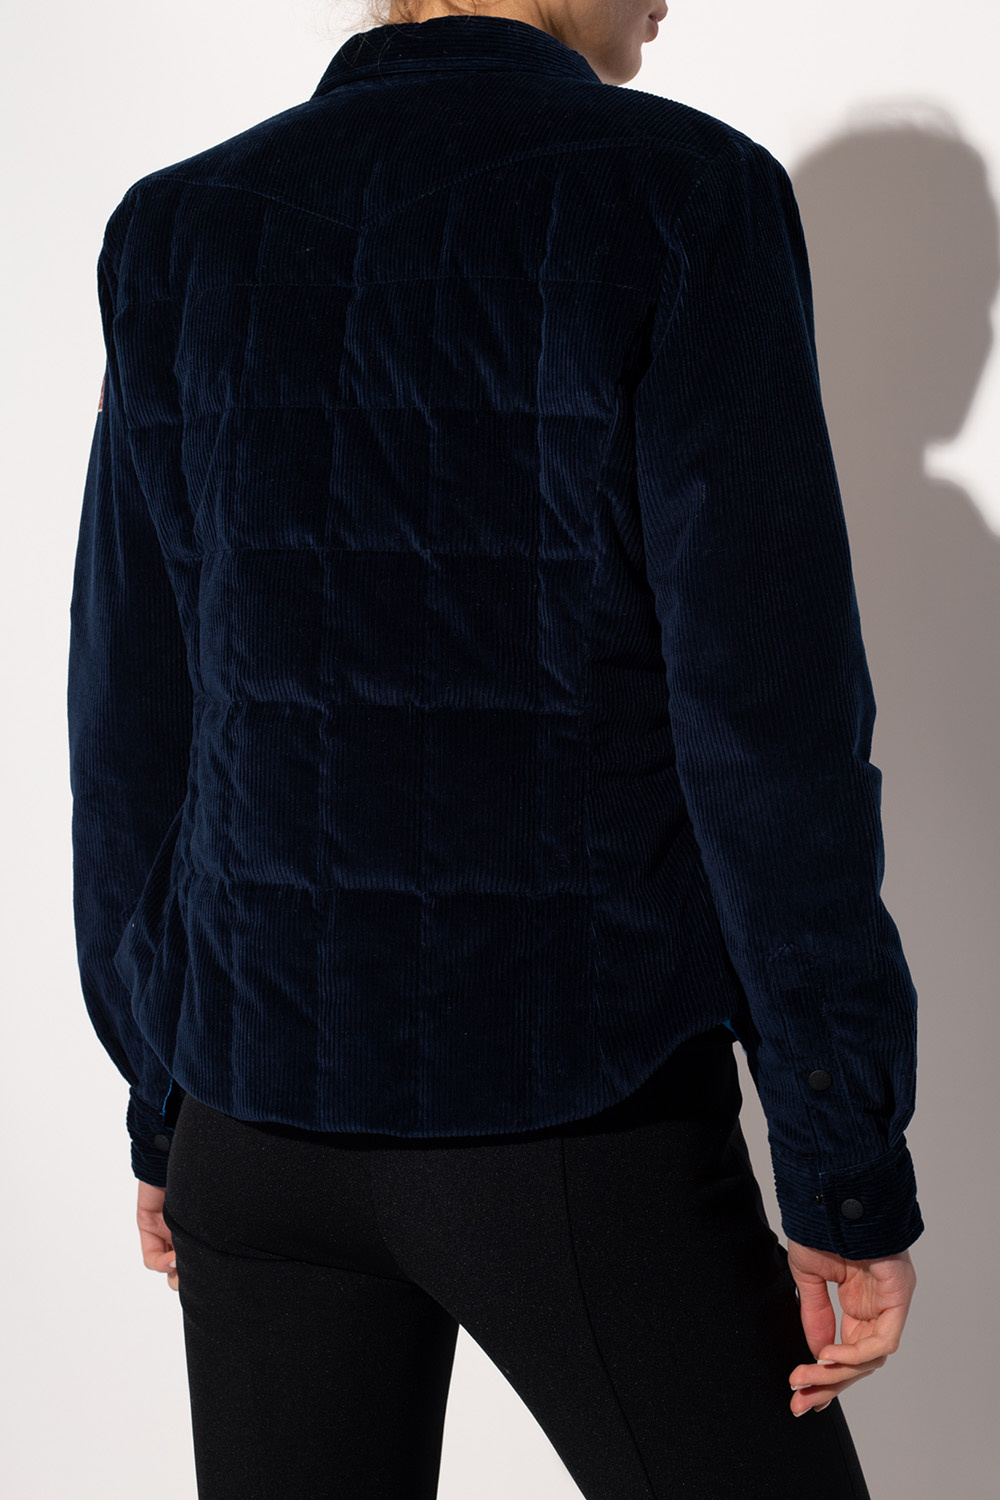 Moncler Grenoble ‘Nangy’ corduroy jacket